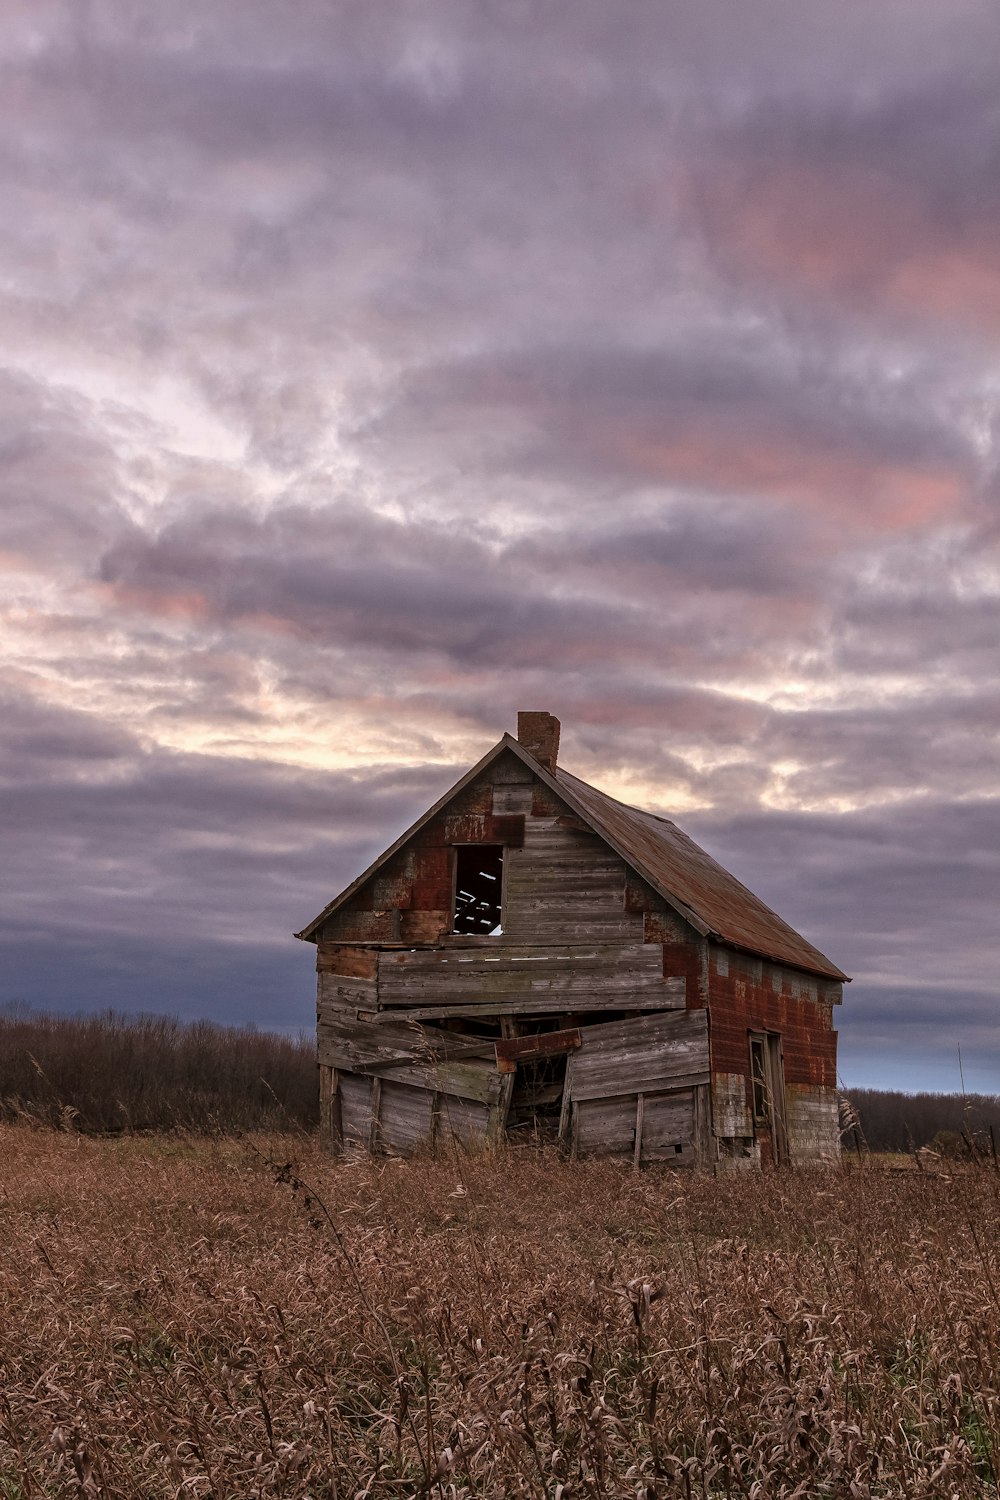 brown wooden barn on brown grass field under gray clouds